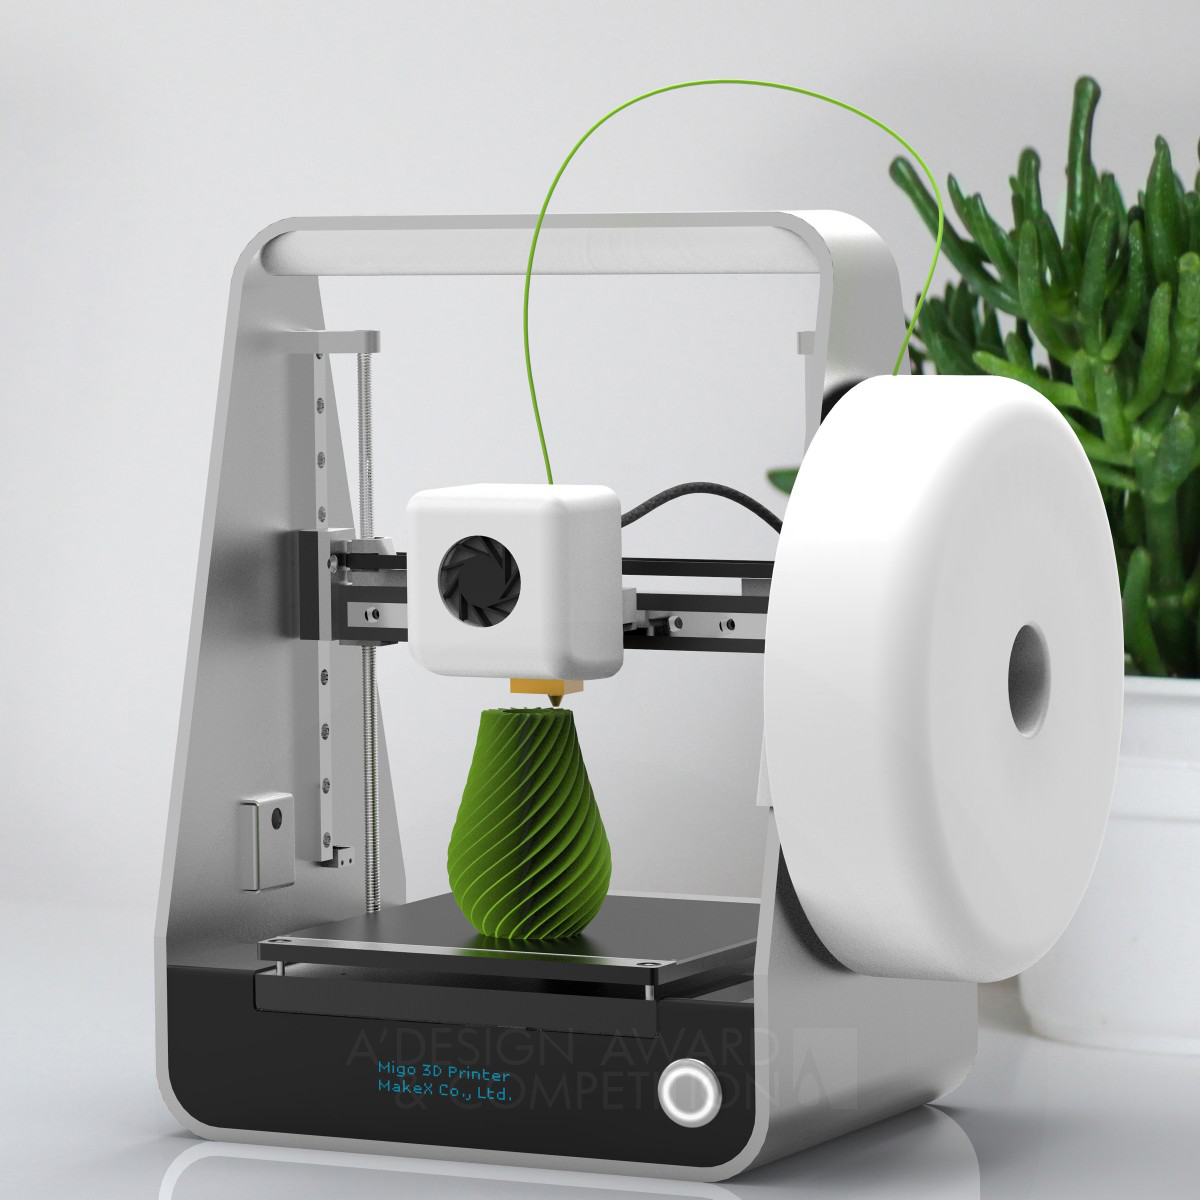 Migo 3D Printer by Junshen Pan